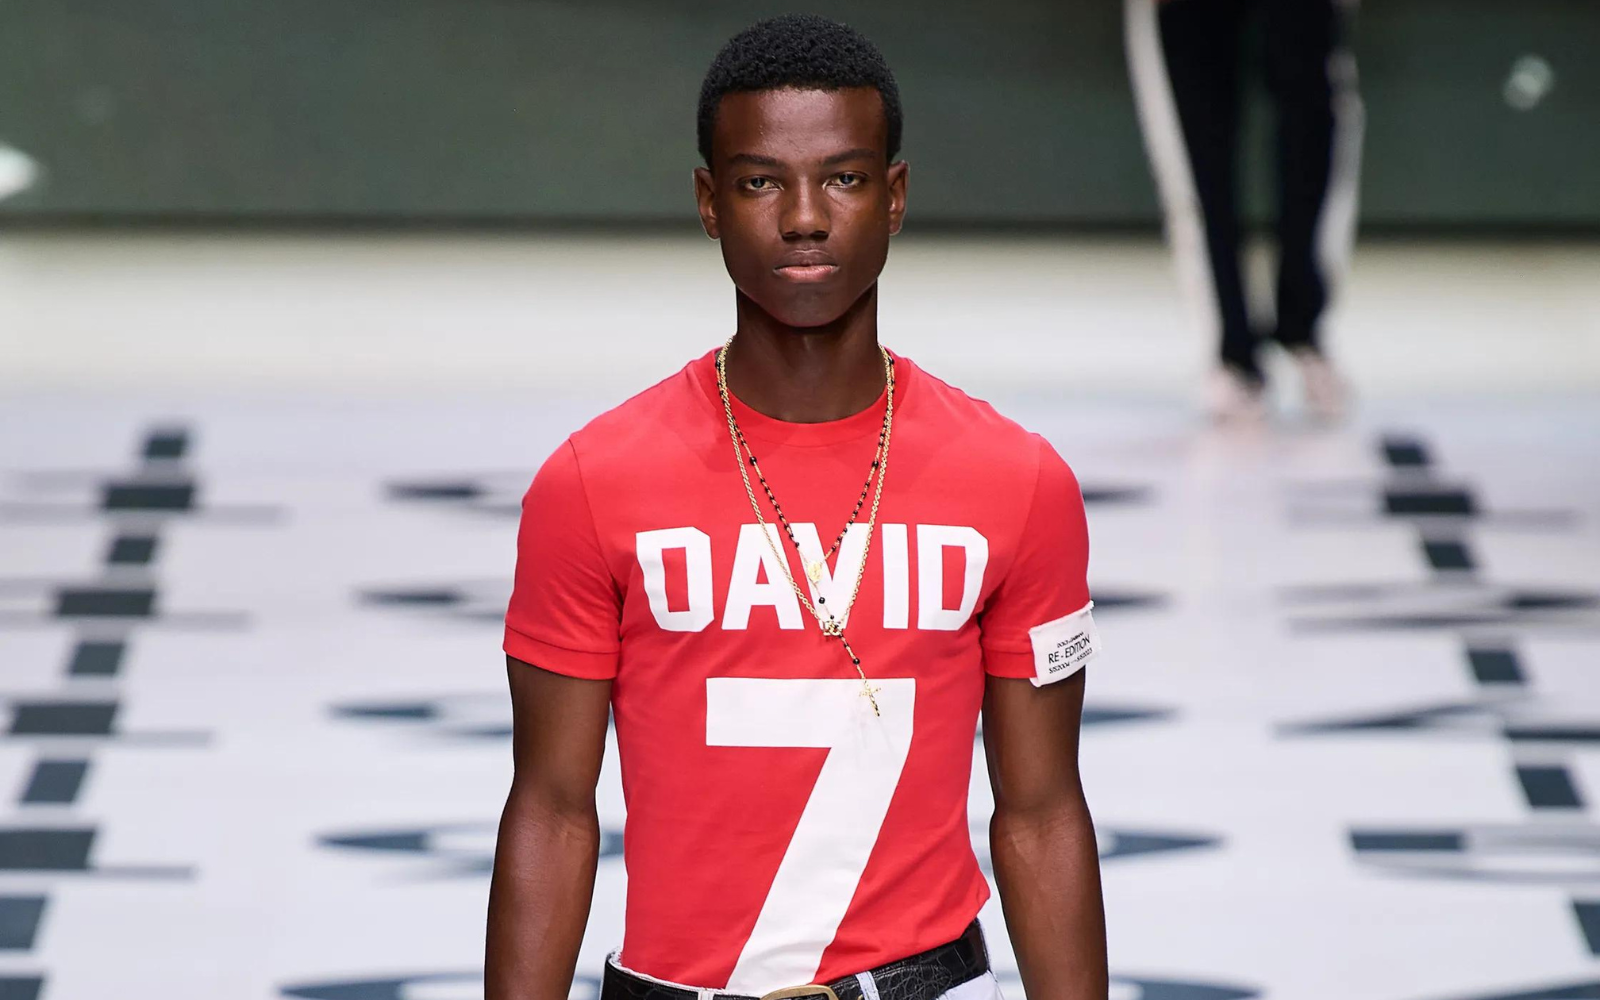 DAVID BECKHAM STYLE INSPIRATION, I Men's Fashion 2022